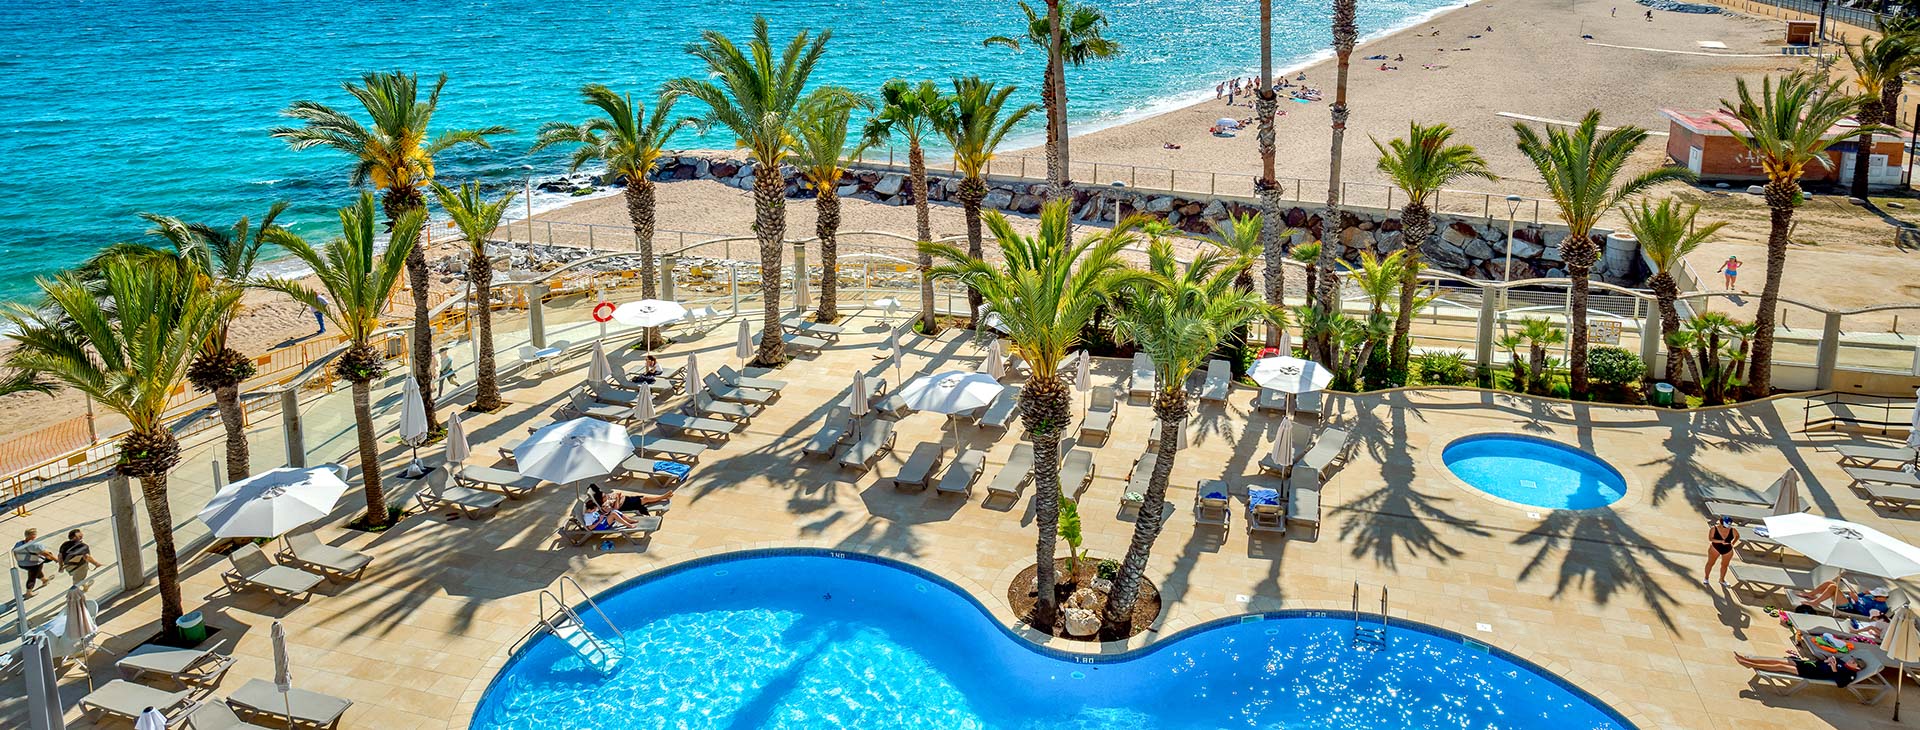 Caprici Beach Hotel & Spa Obrázek1